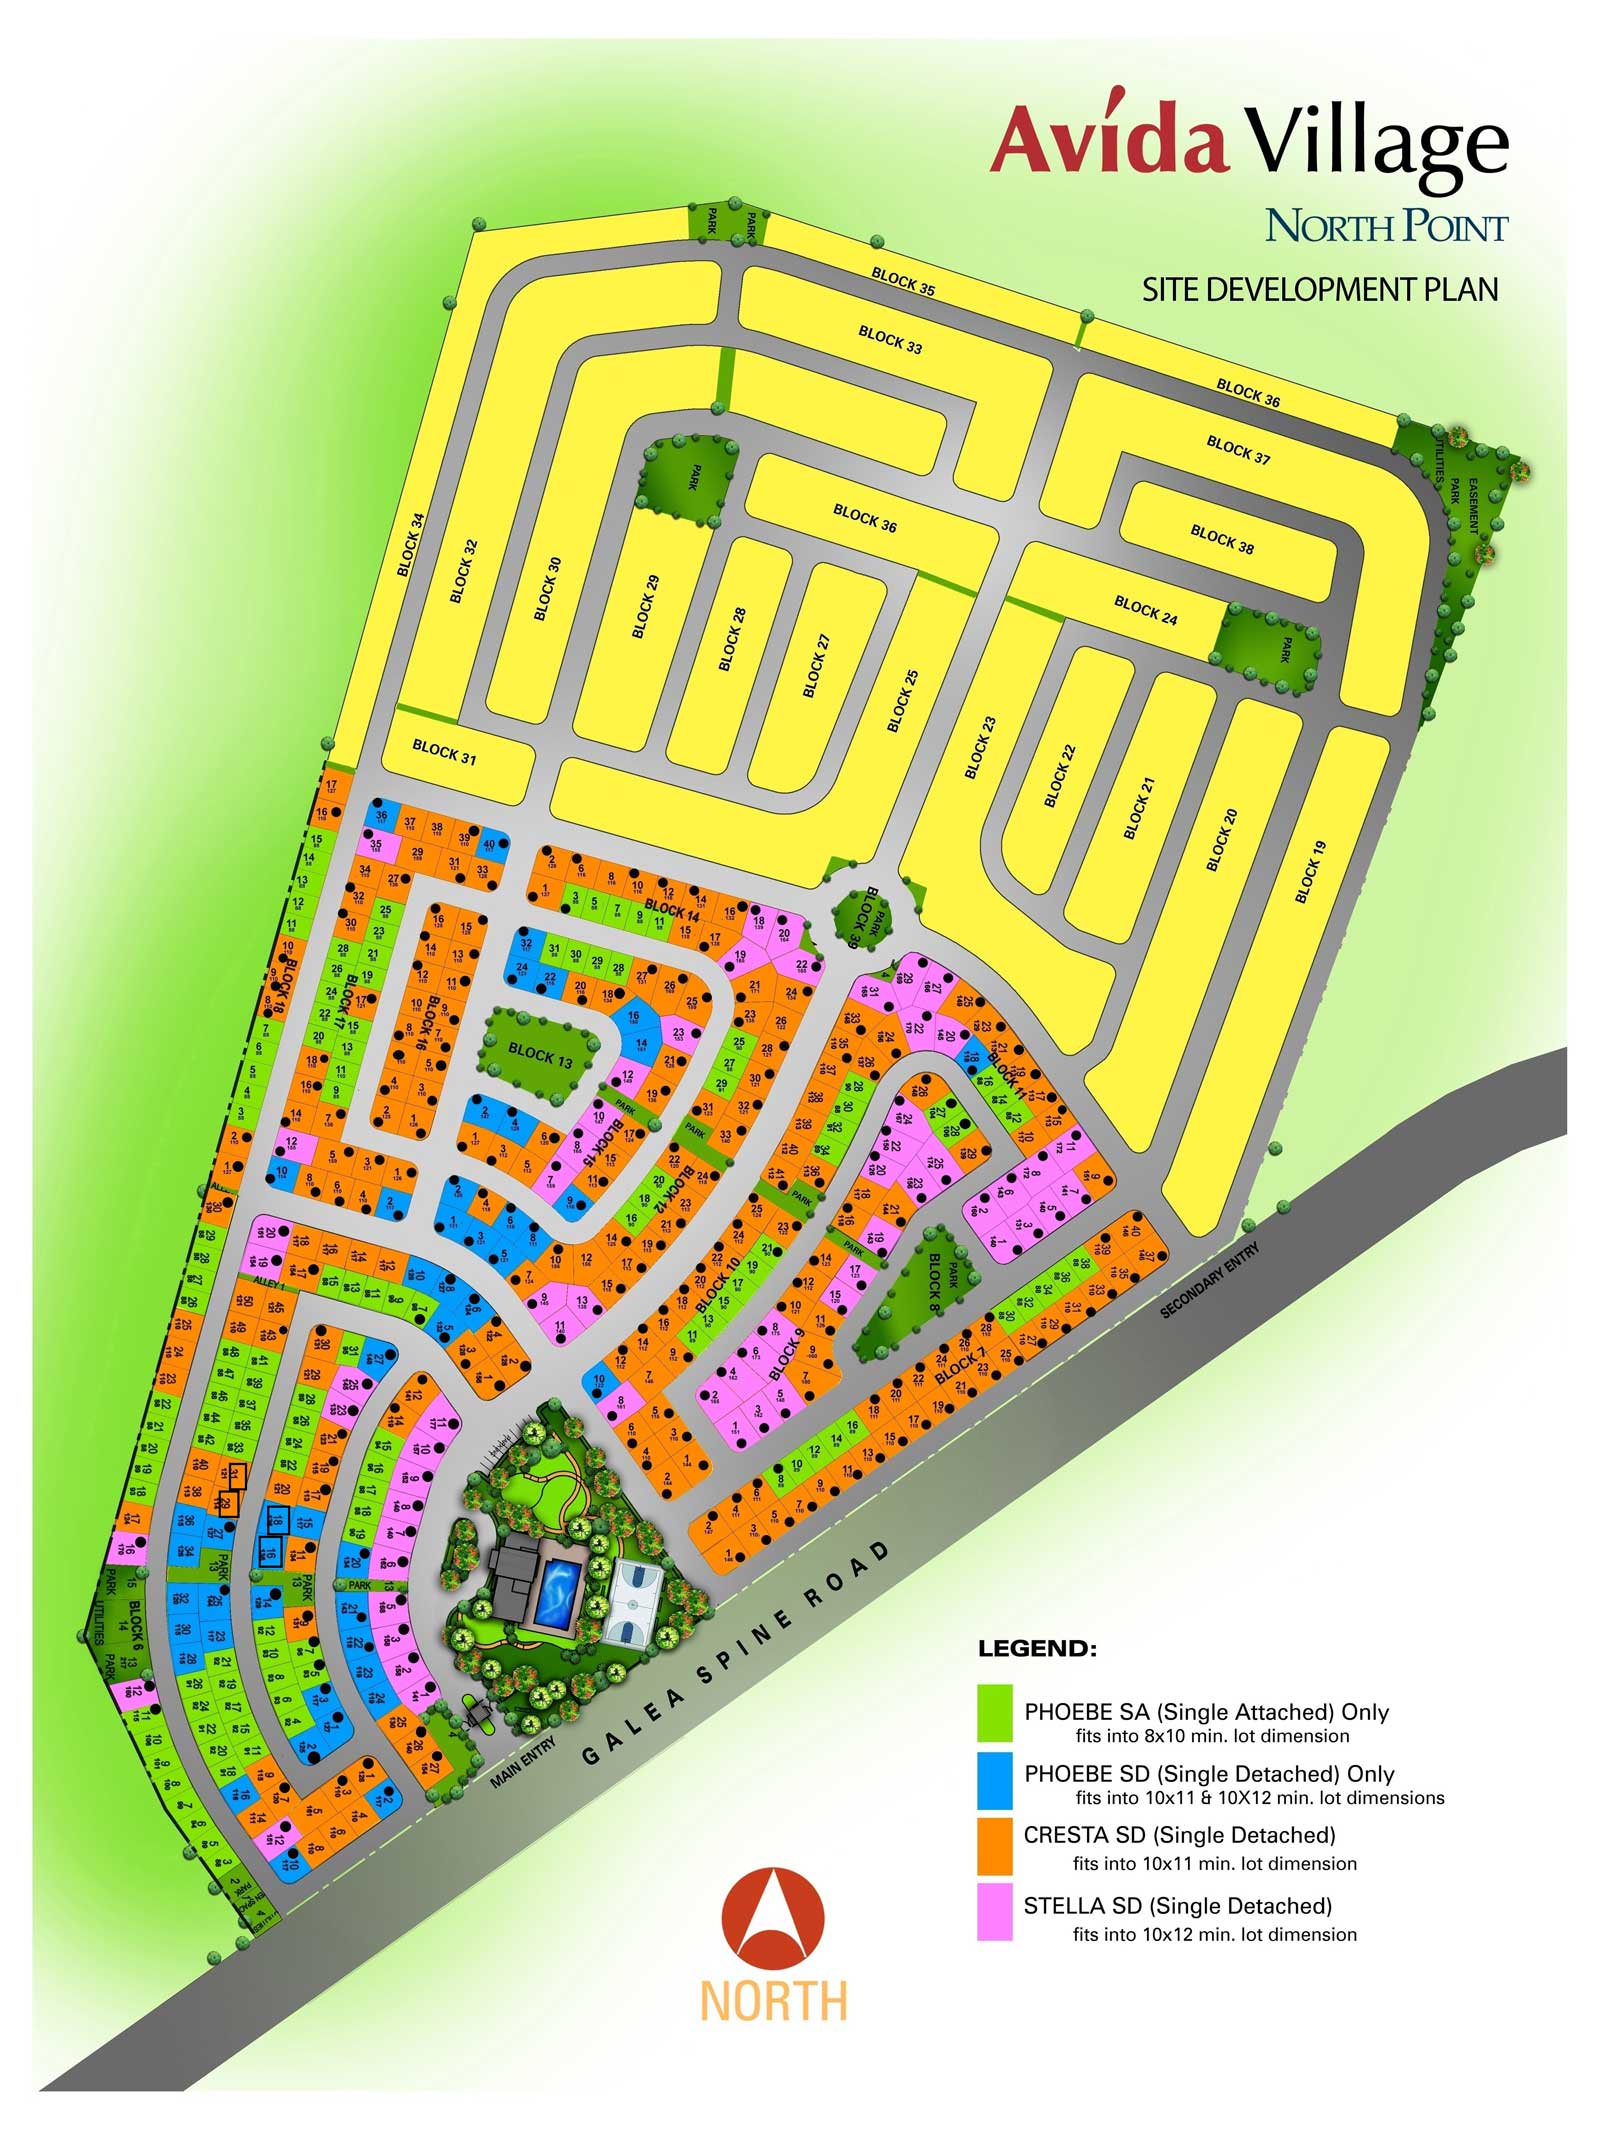 Avida Village North Point Site Development Plan